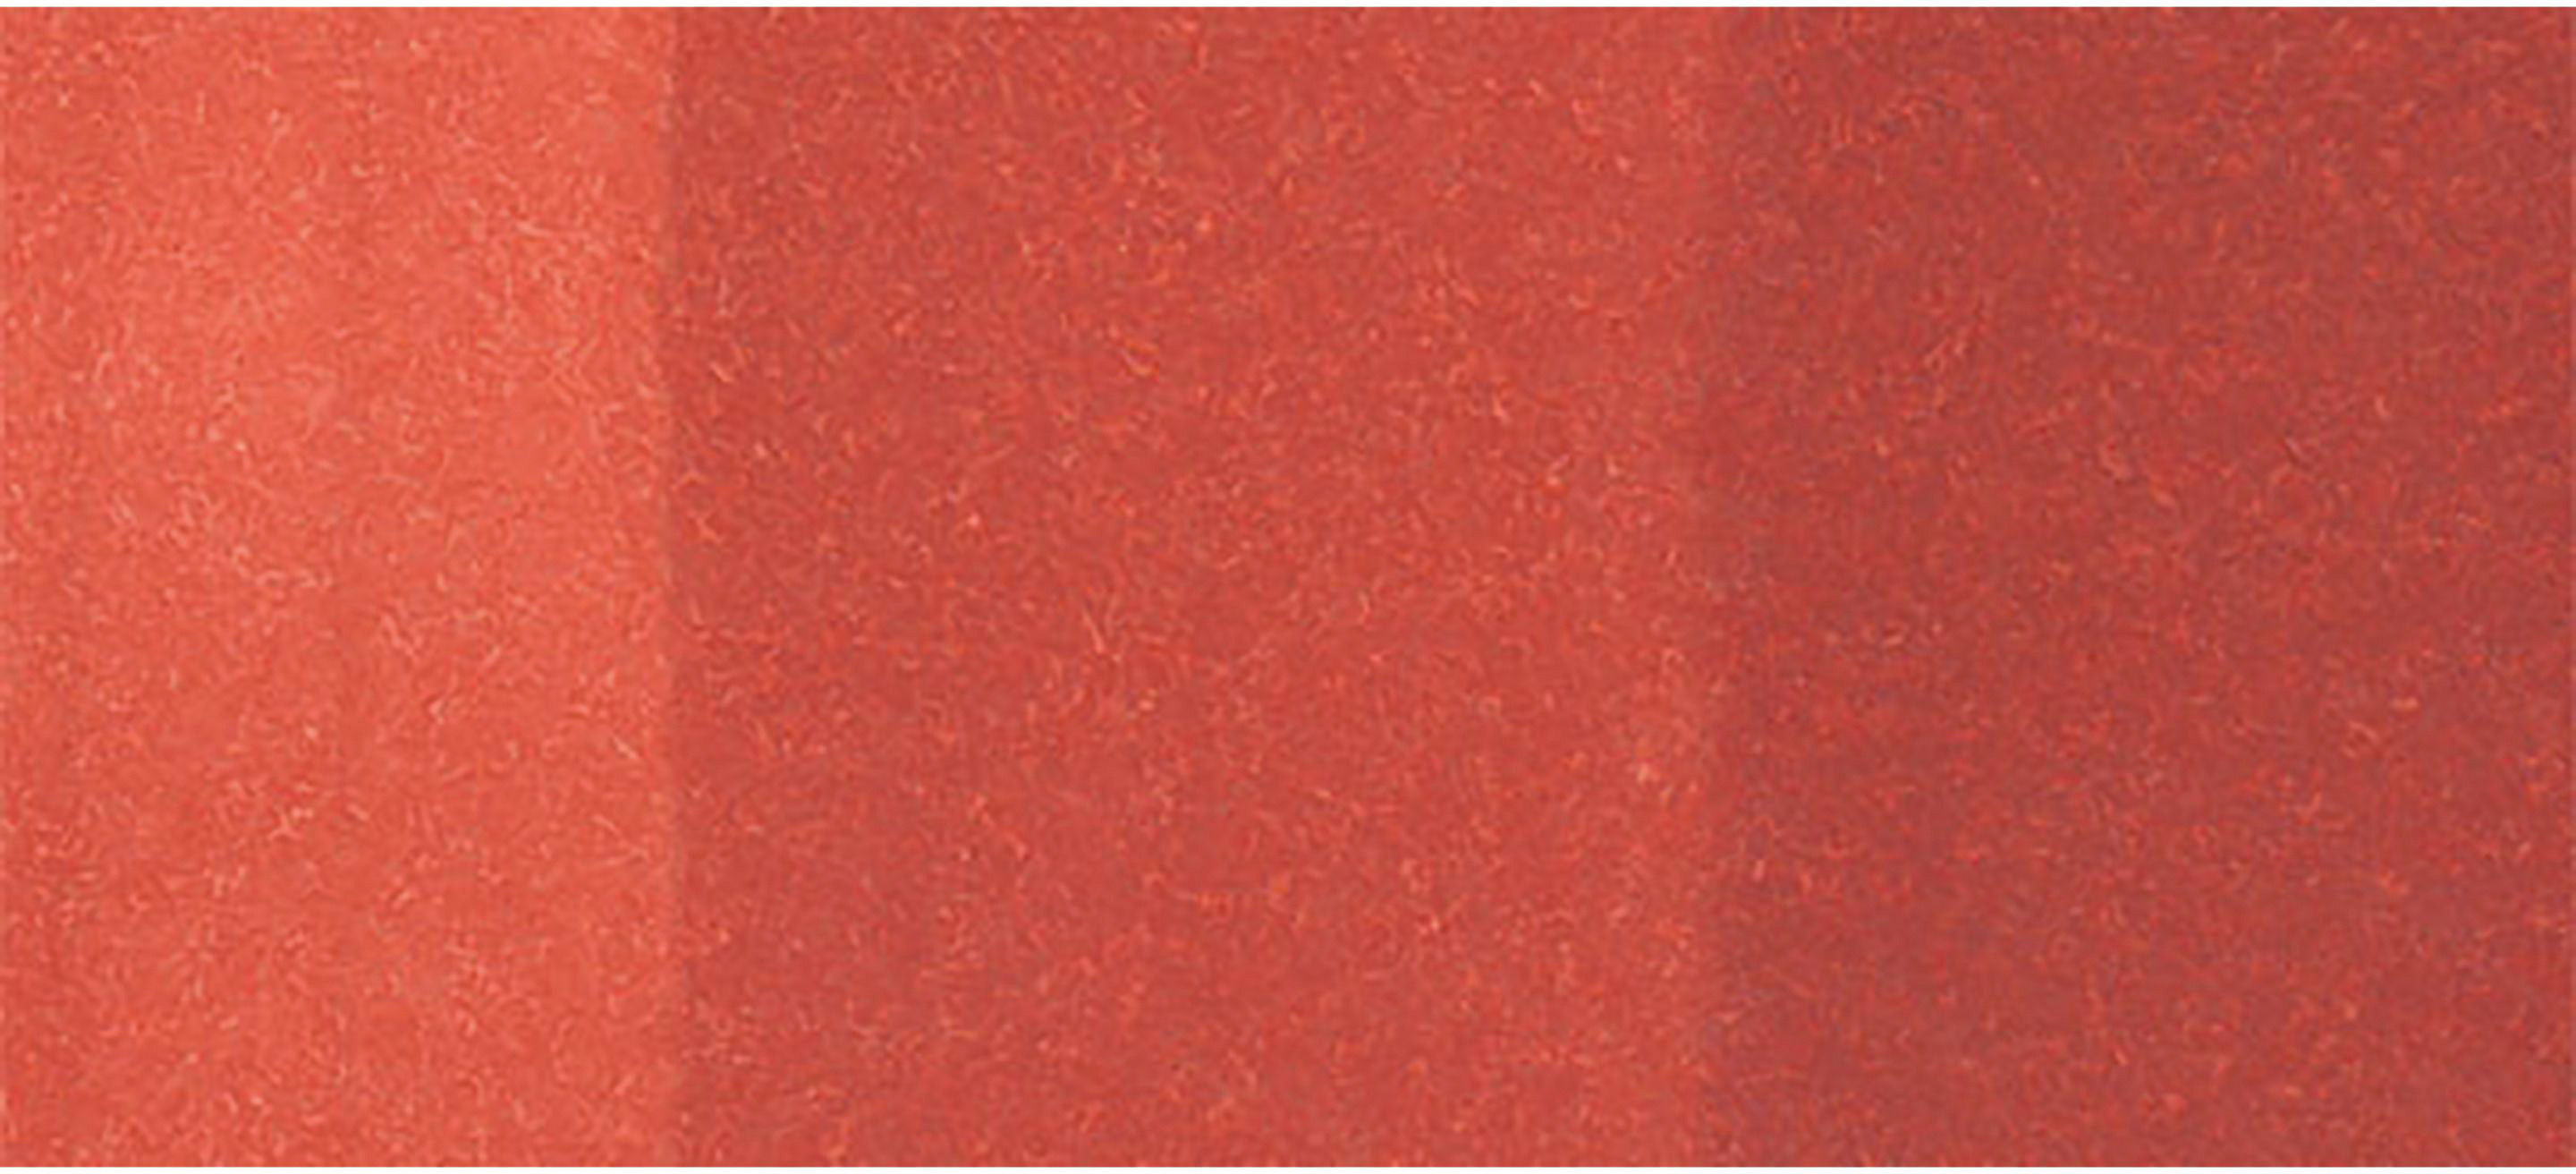 COPIC Marker Sketch 2107529 E09 - Burnt Sienna